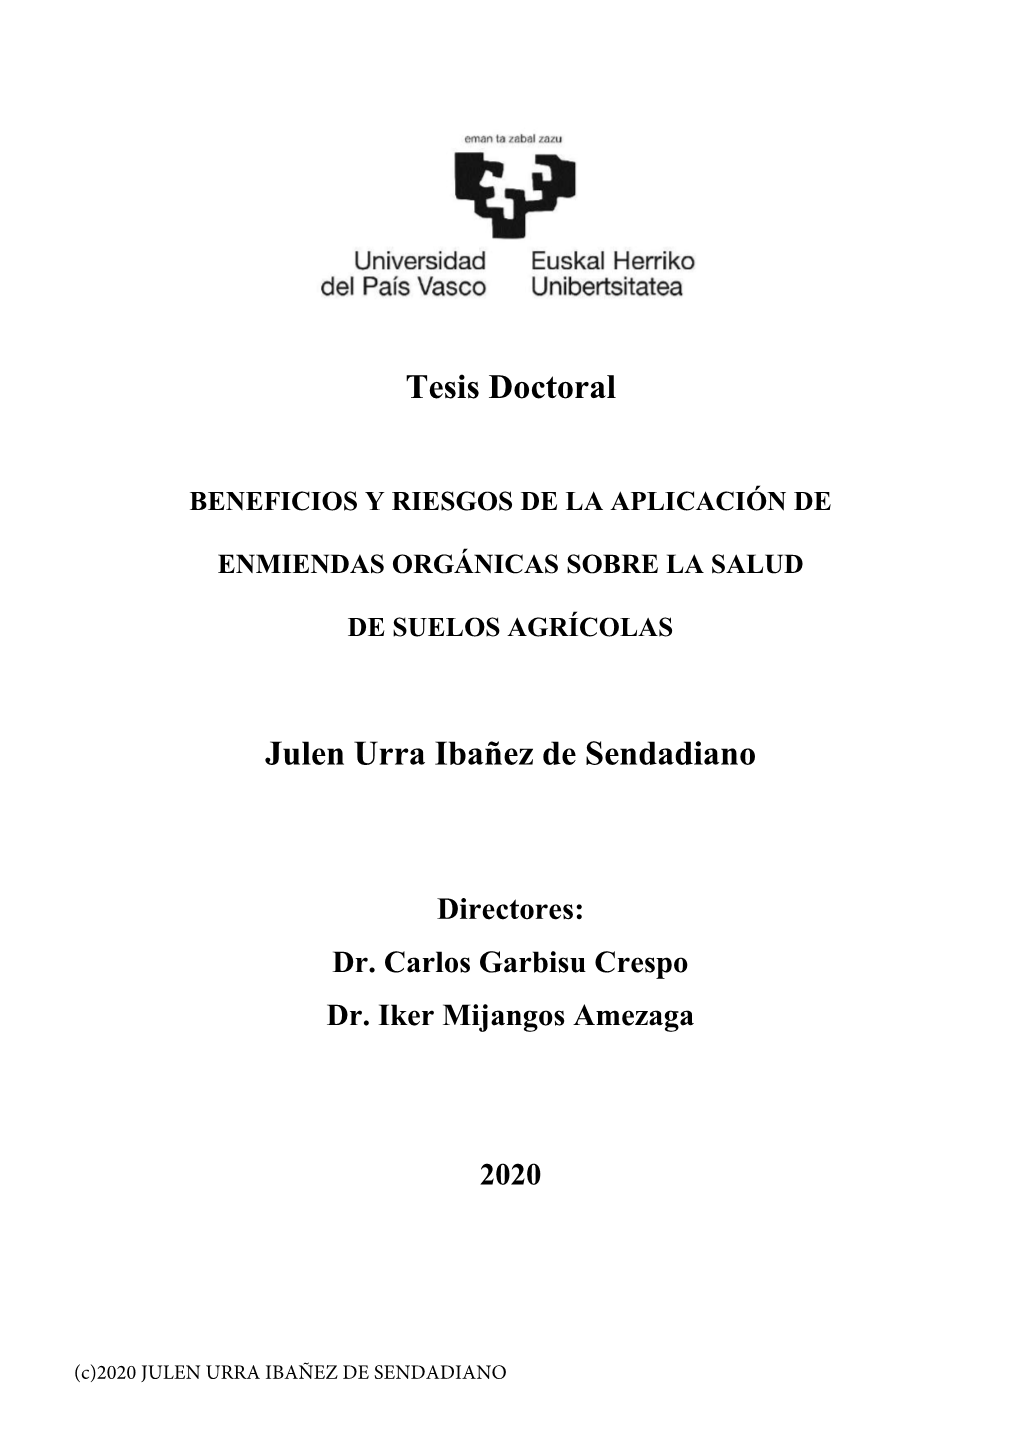 Tesis Doctoral Julen Urra Ibañez De Sendadiano